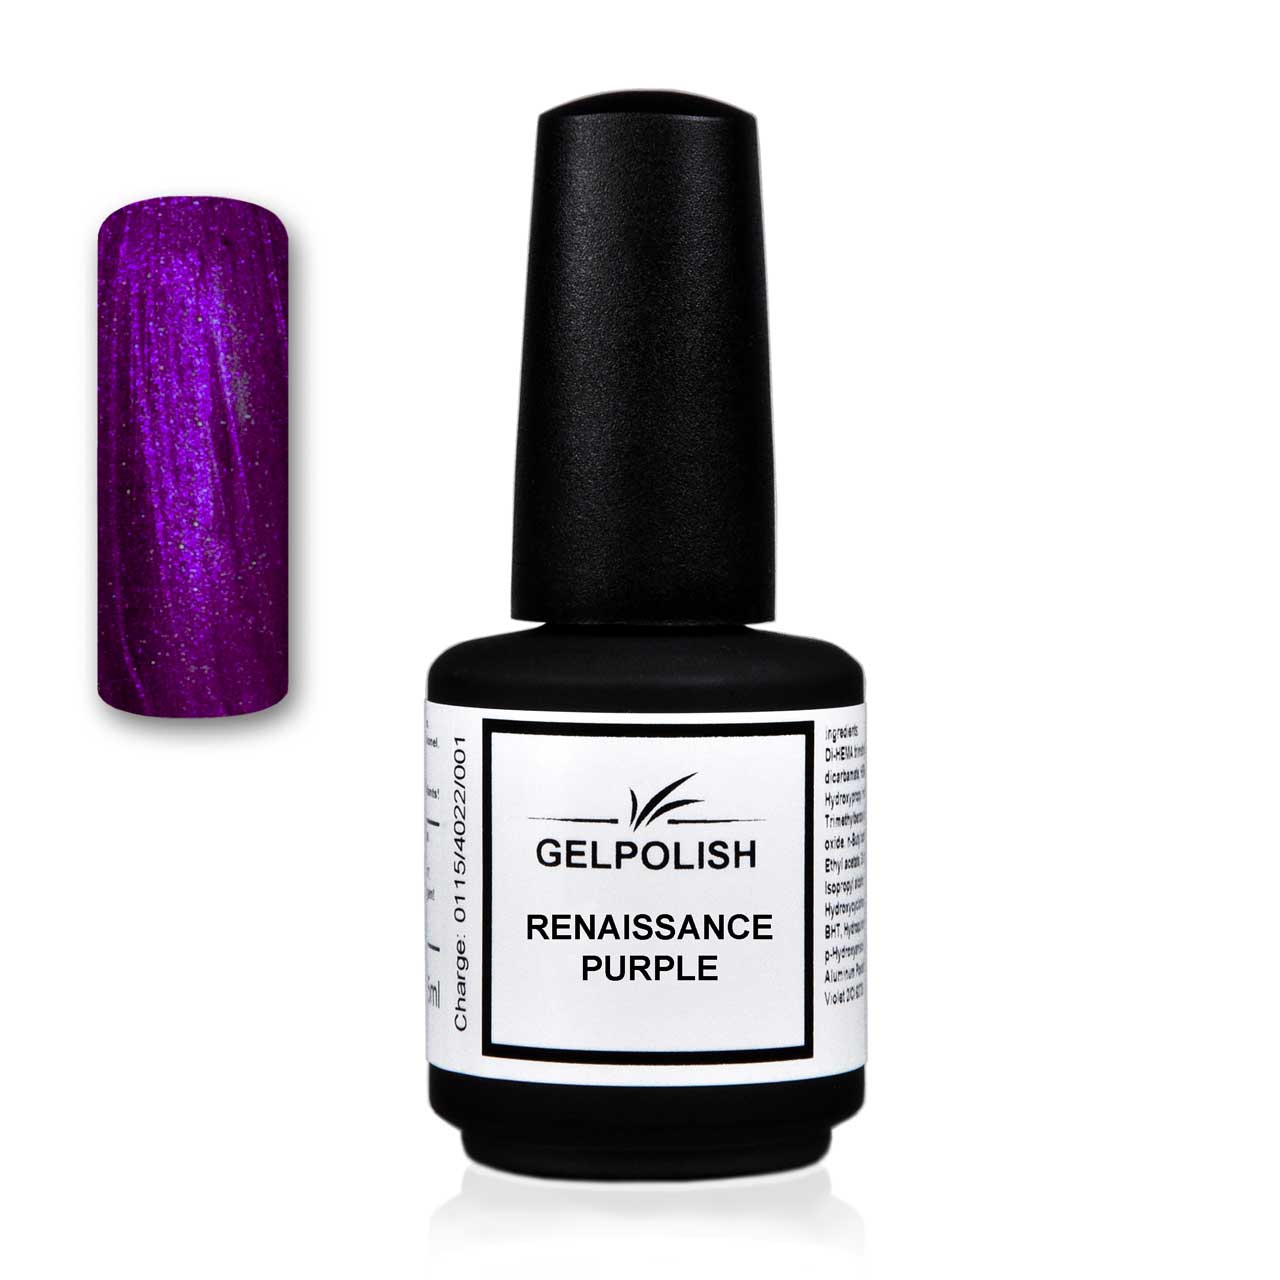 Gelpolish VSP Renaissance Purple